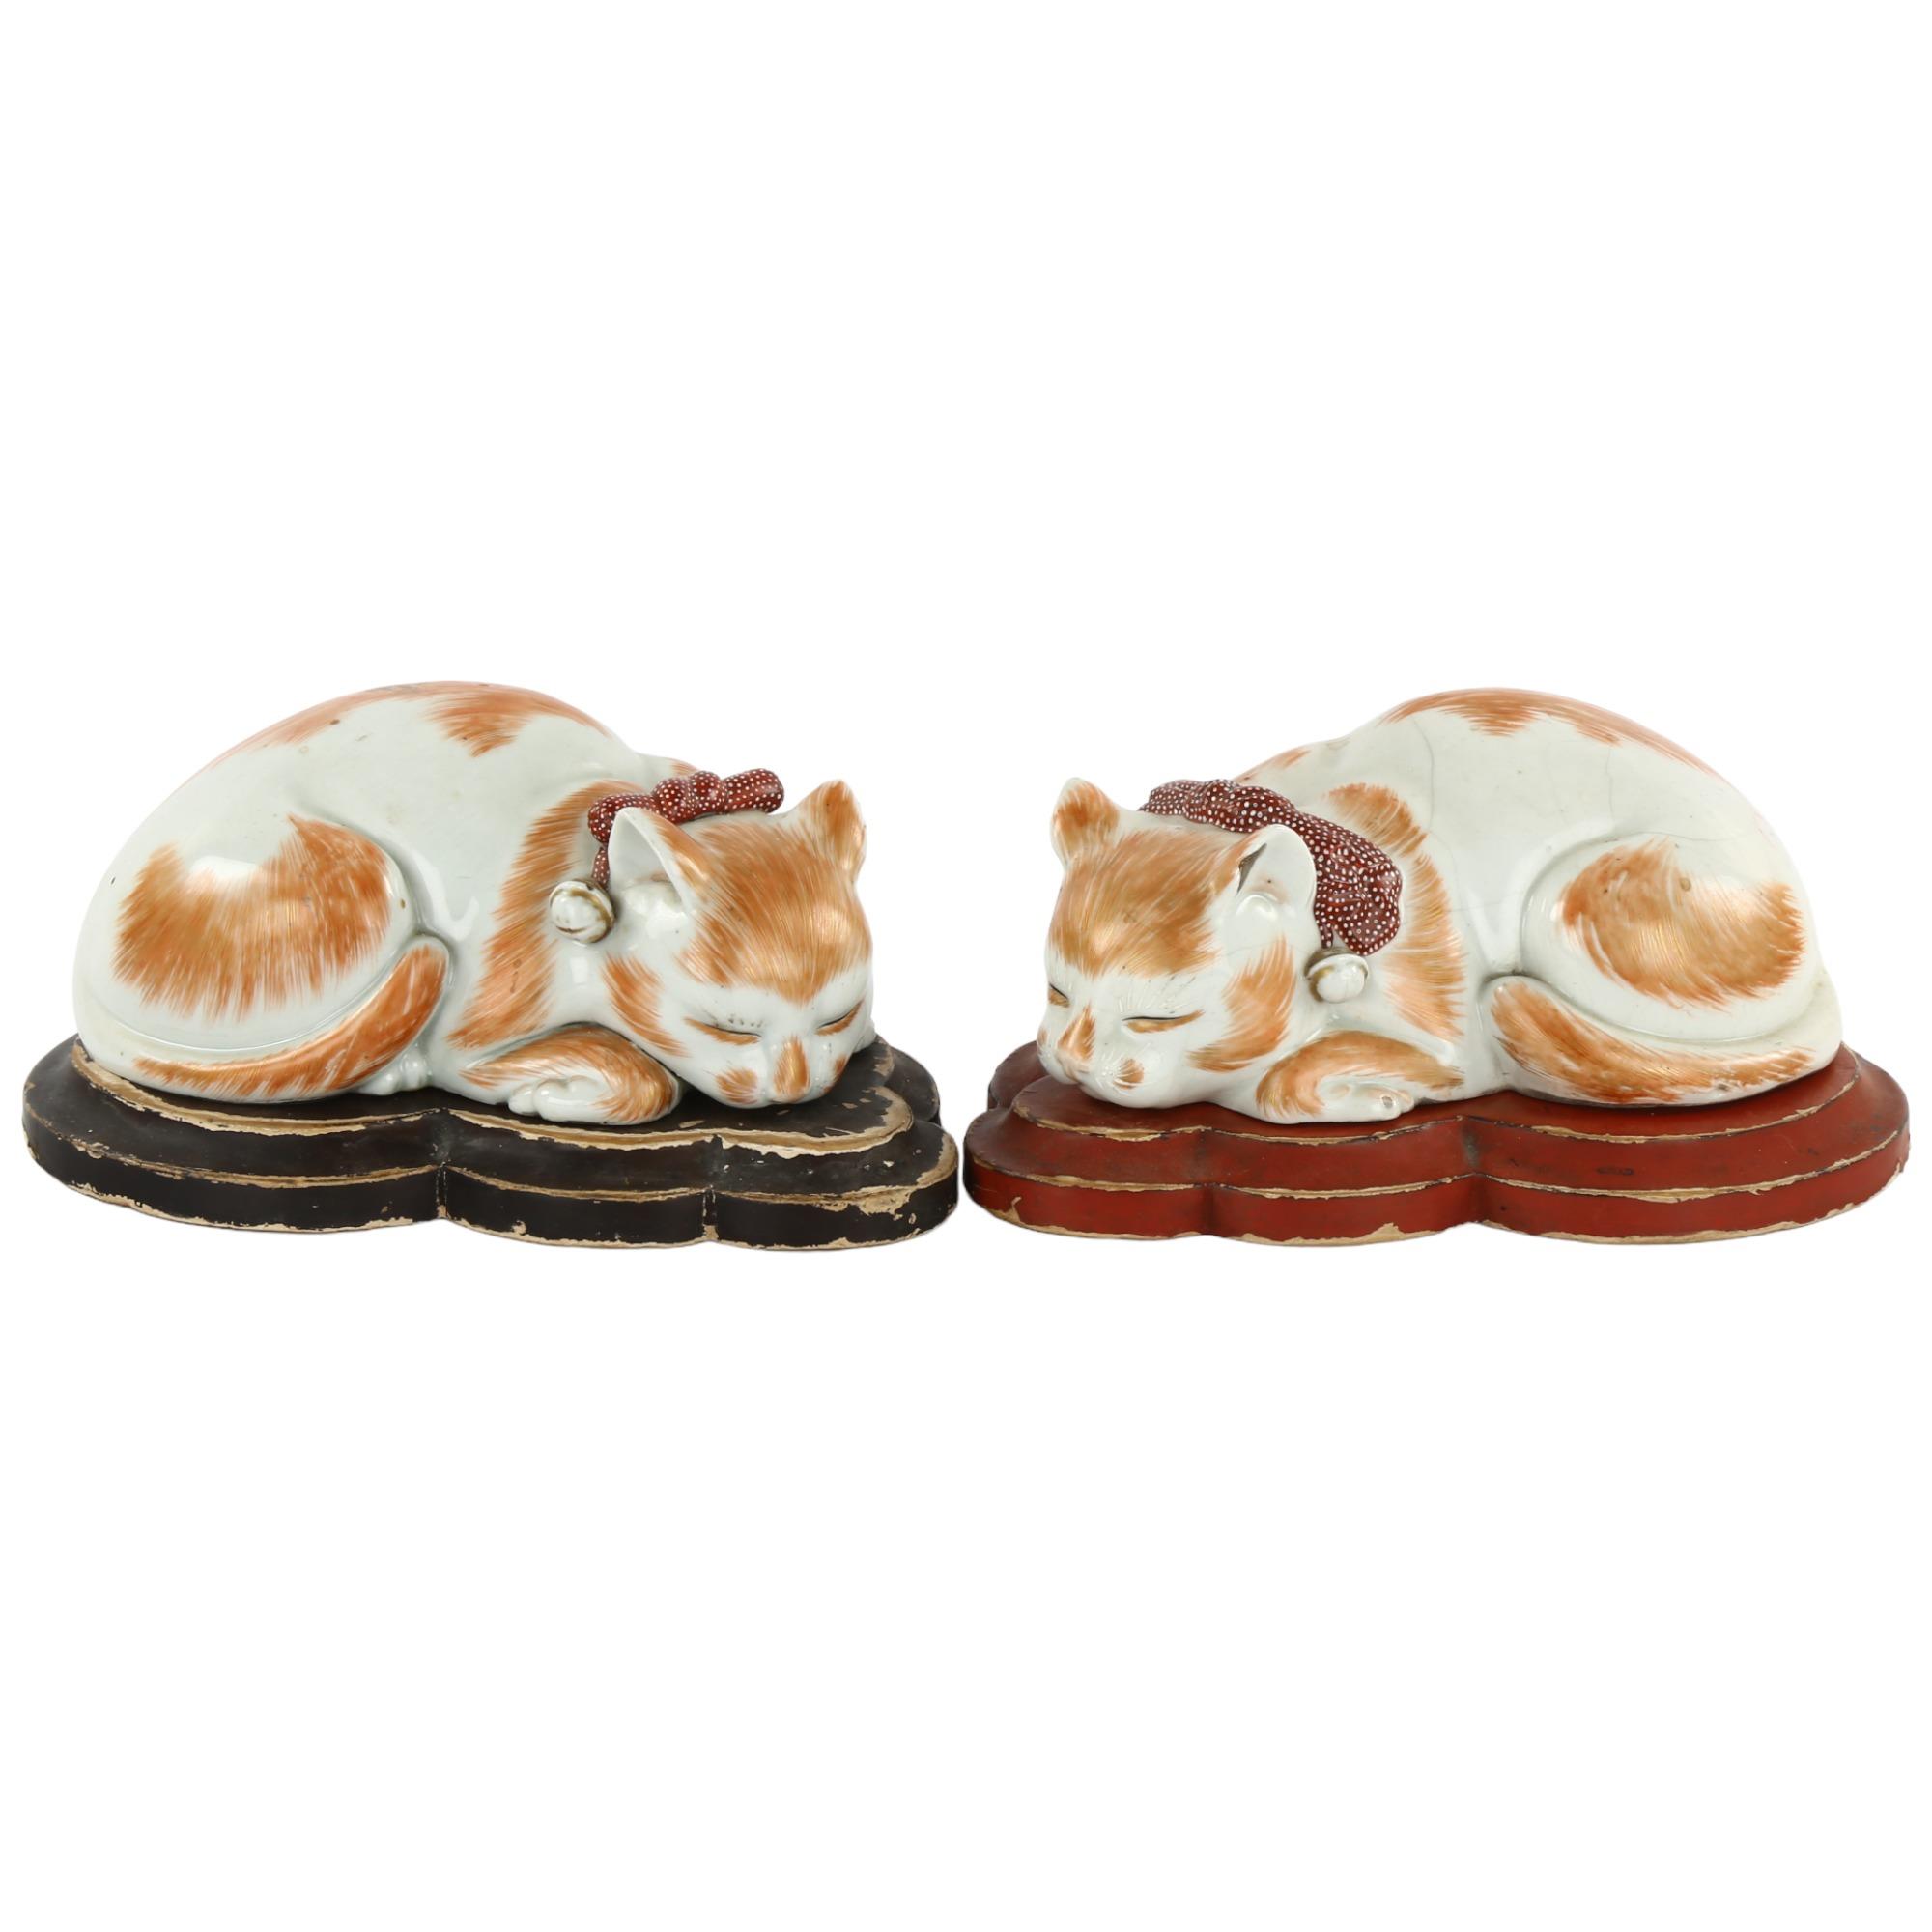 2 similar Japanese, Meiji period, sleeping porcelain cats, on original wooden stands, longest 17.5cm